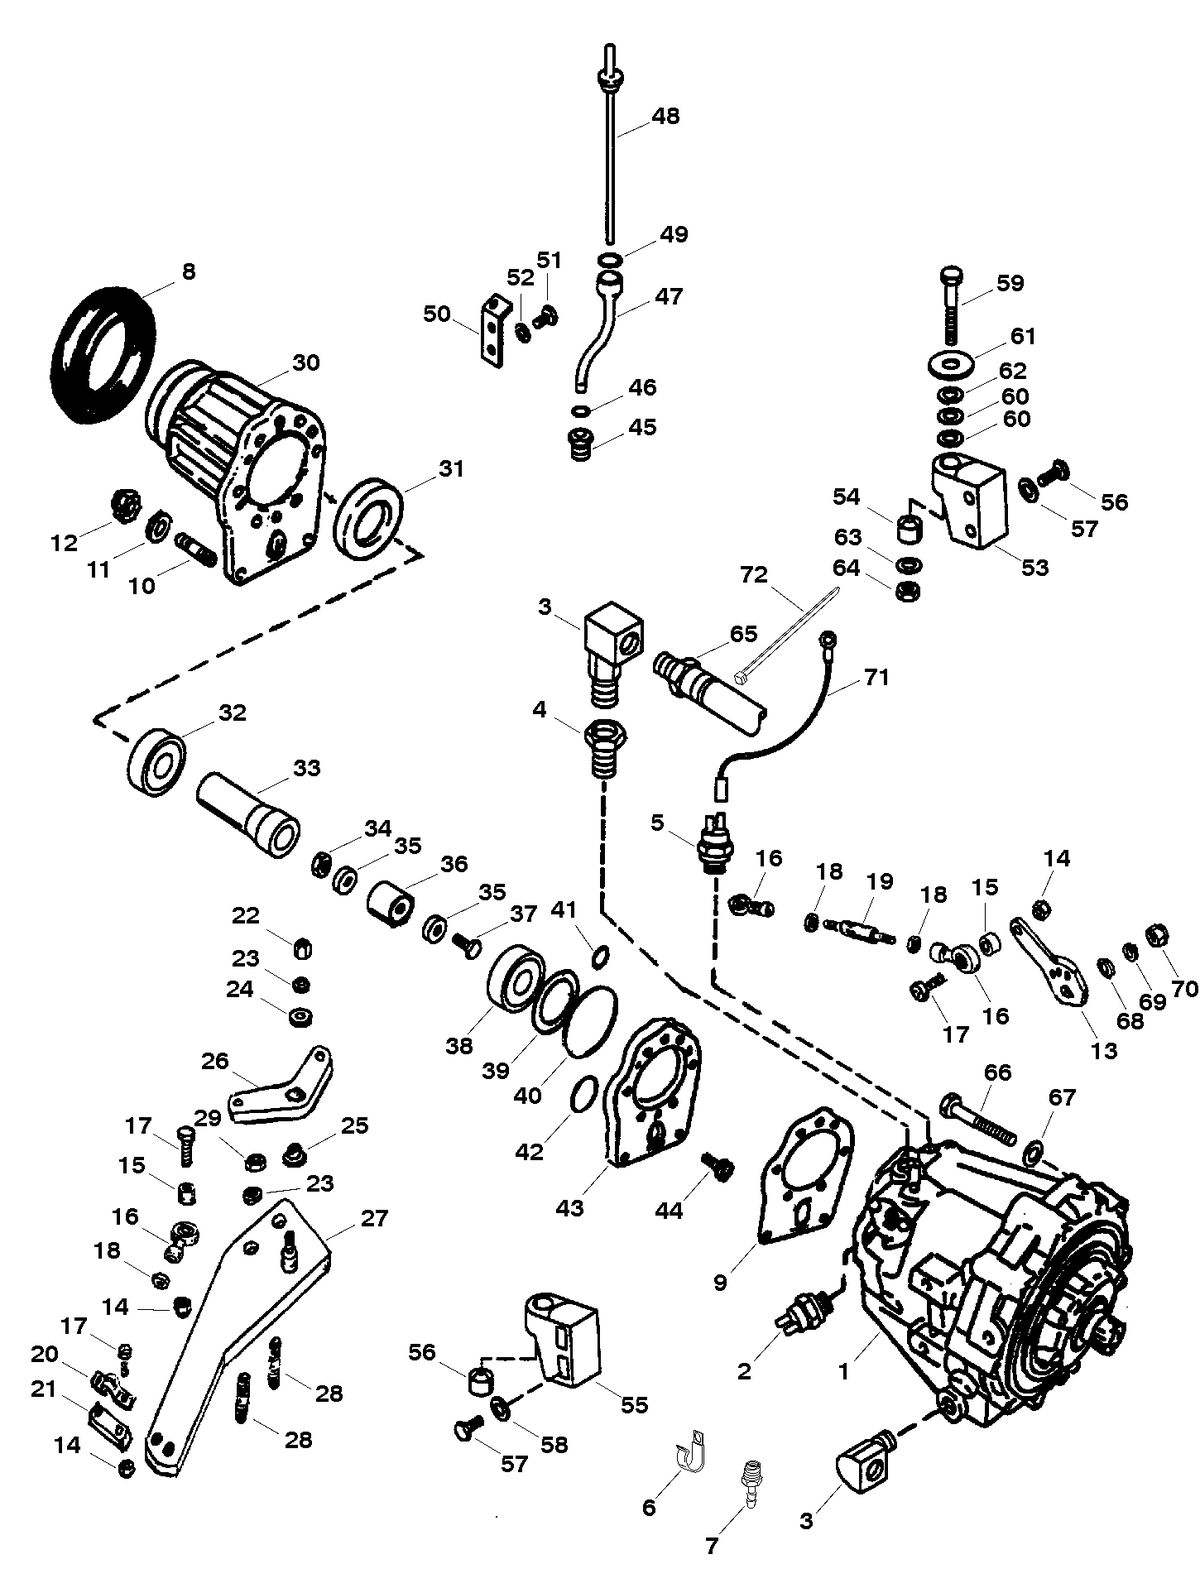 MERCRUISER 800 SC ENGINE TRANSMSISSION AND COMPONENTS - VI DRIVE (BRAVO) (PG 2 0F 2)